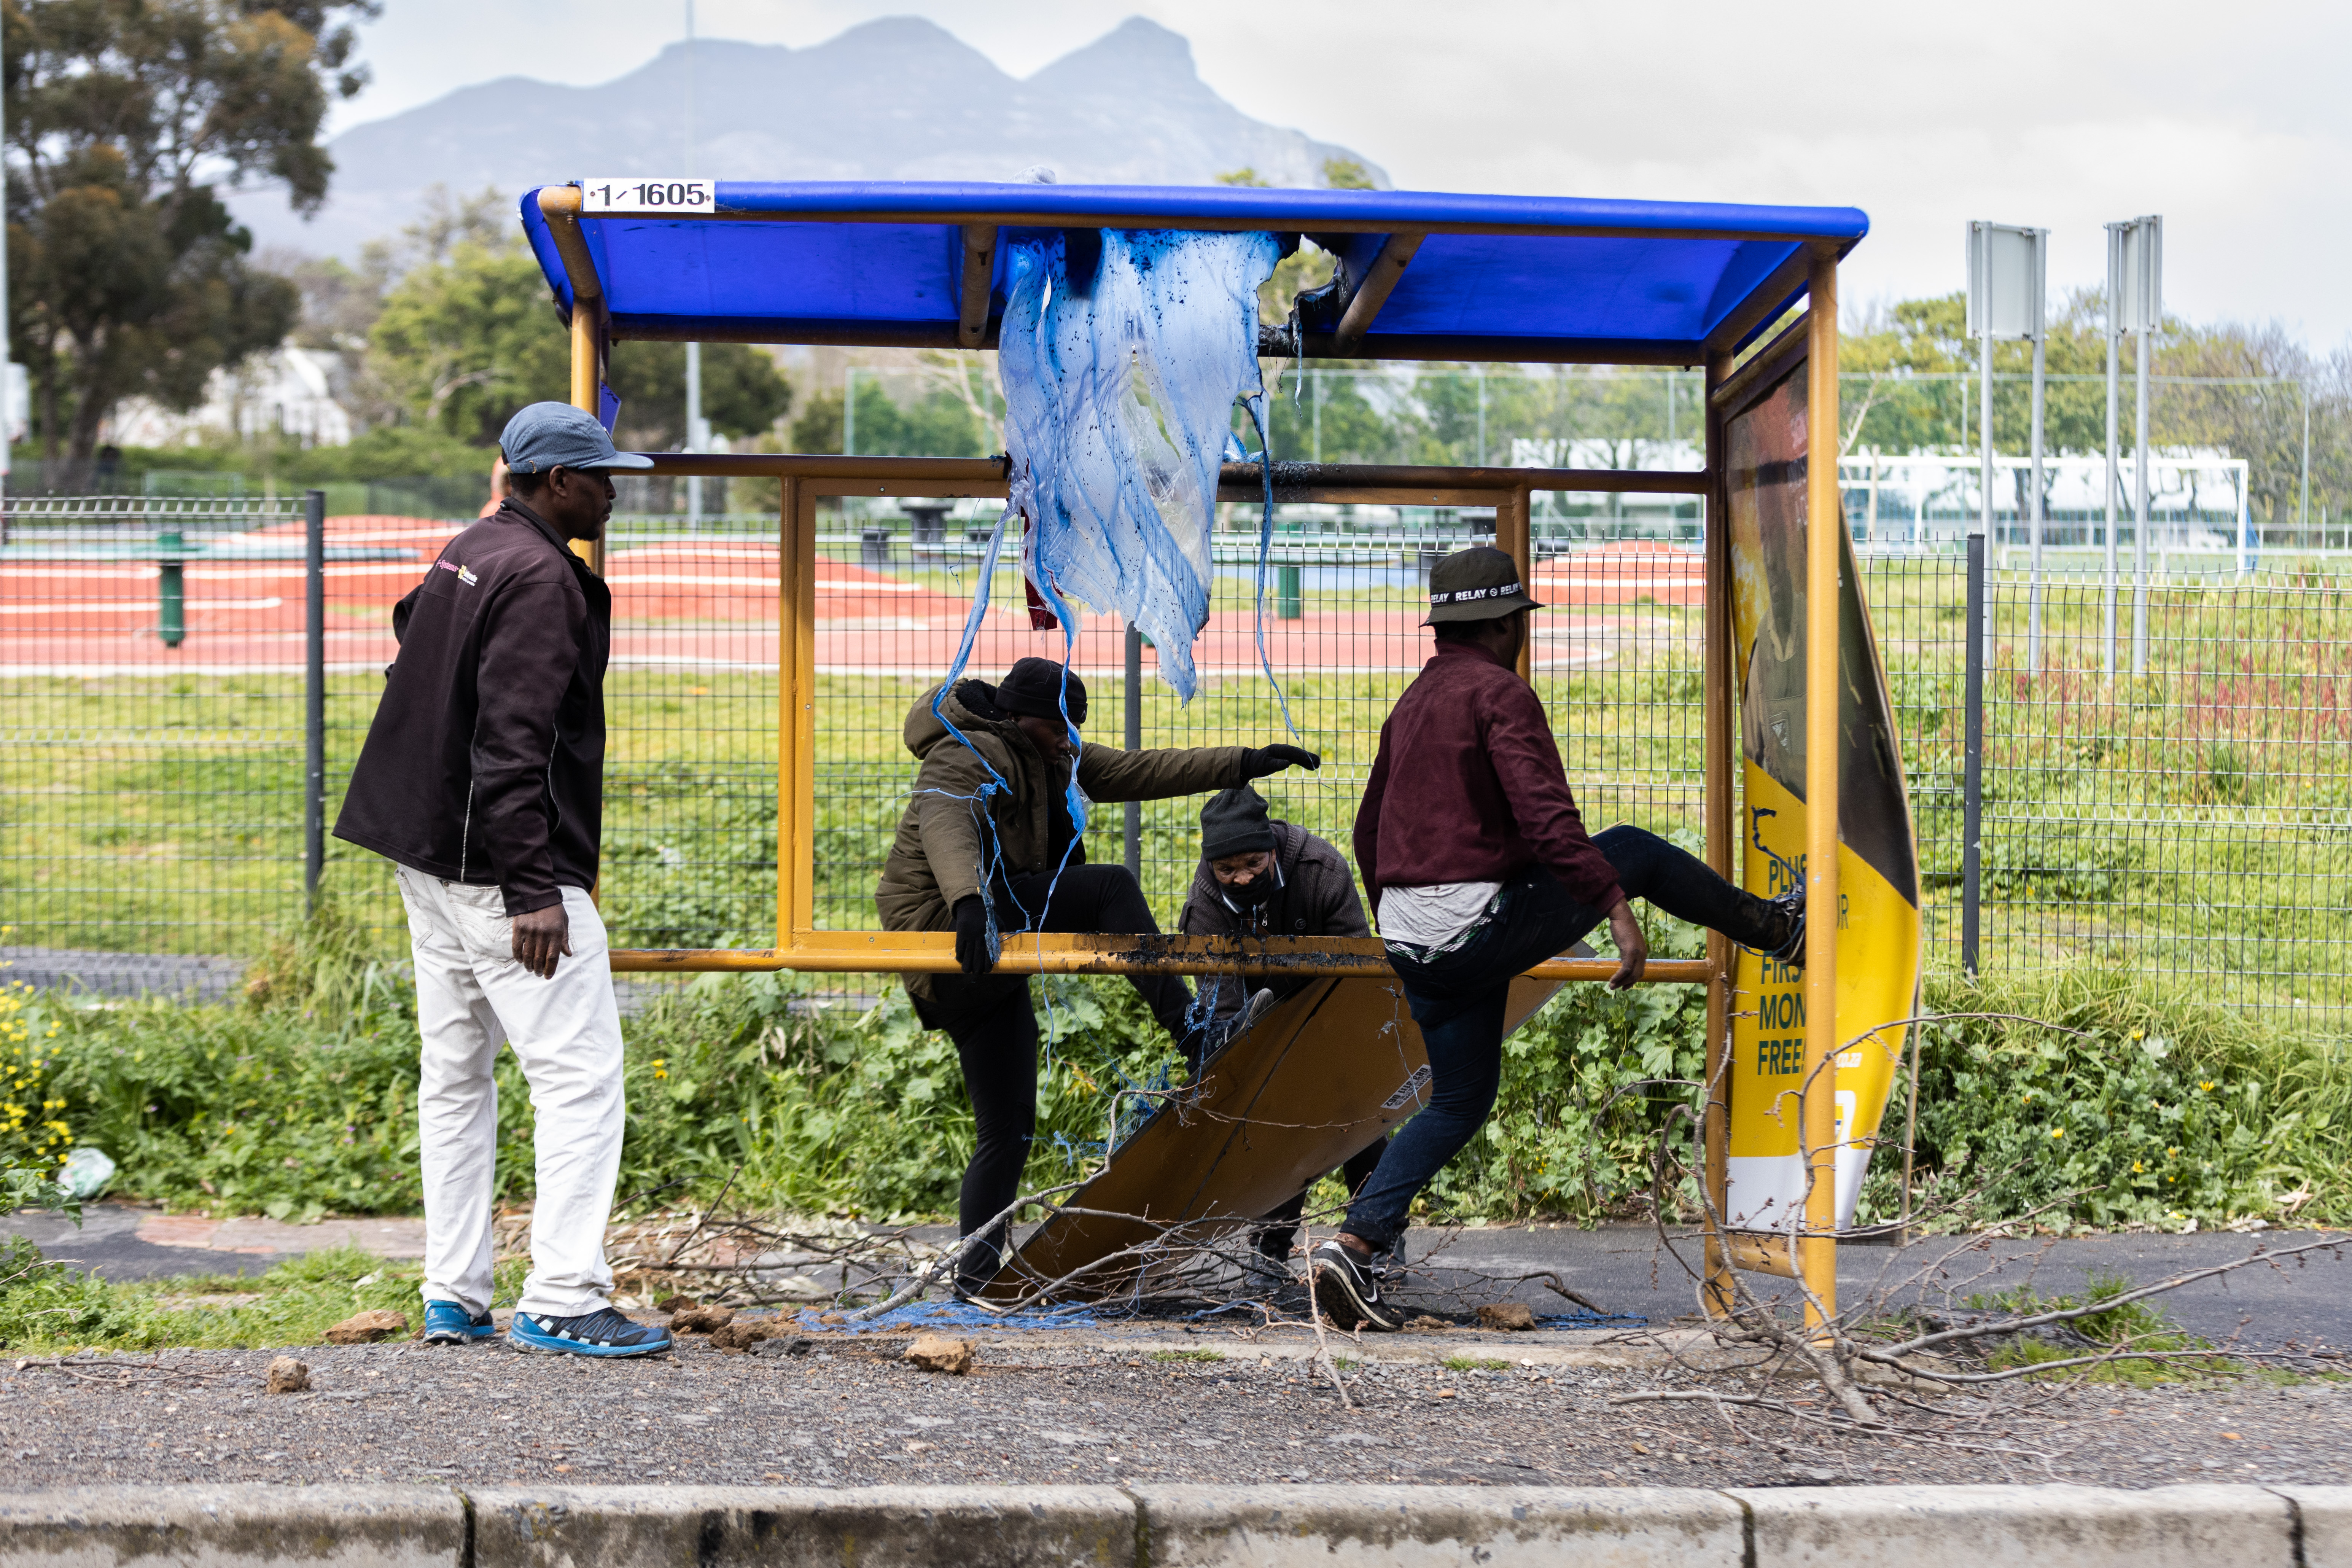 Taxi drivers vandalize a bus stop